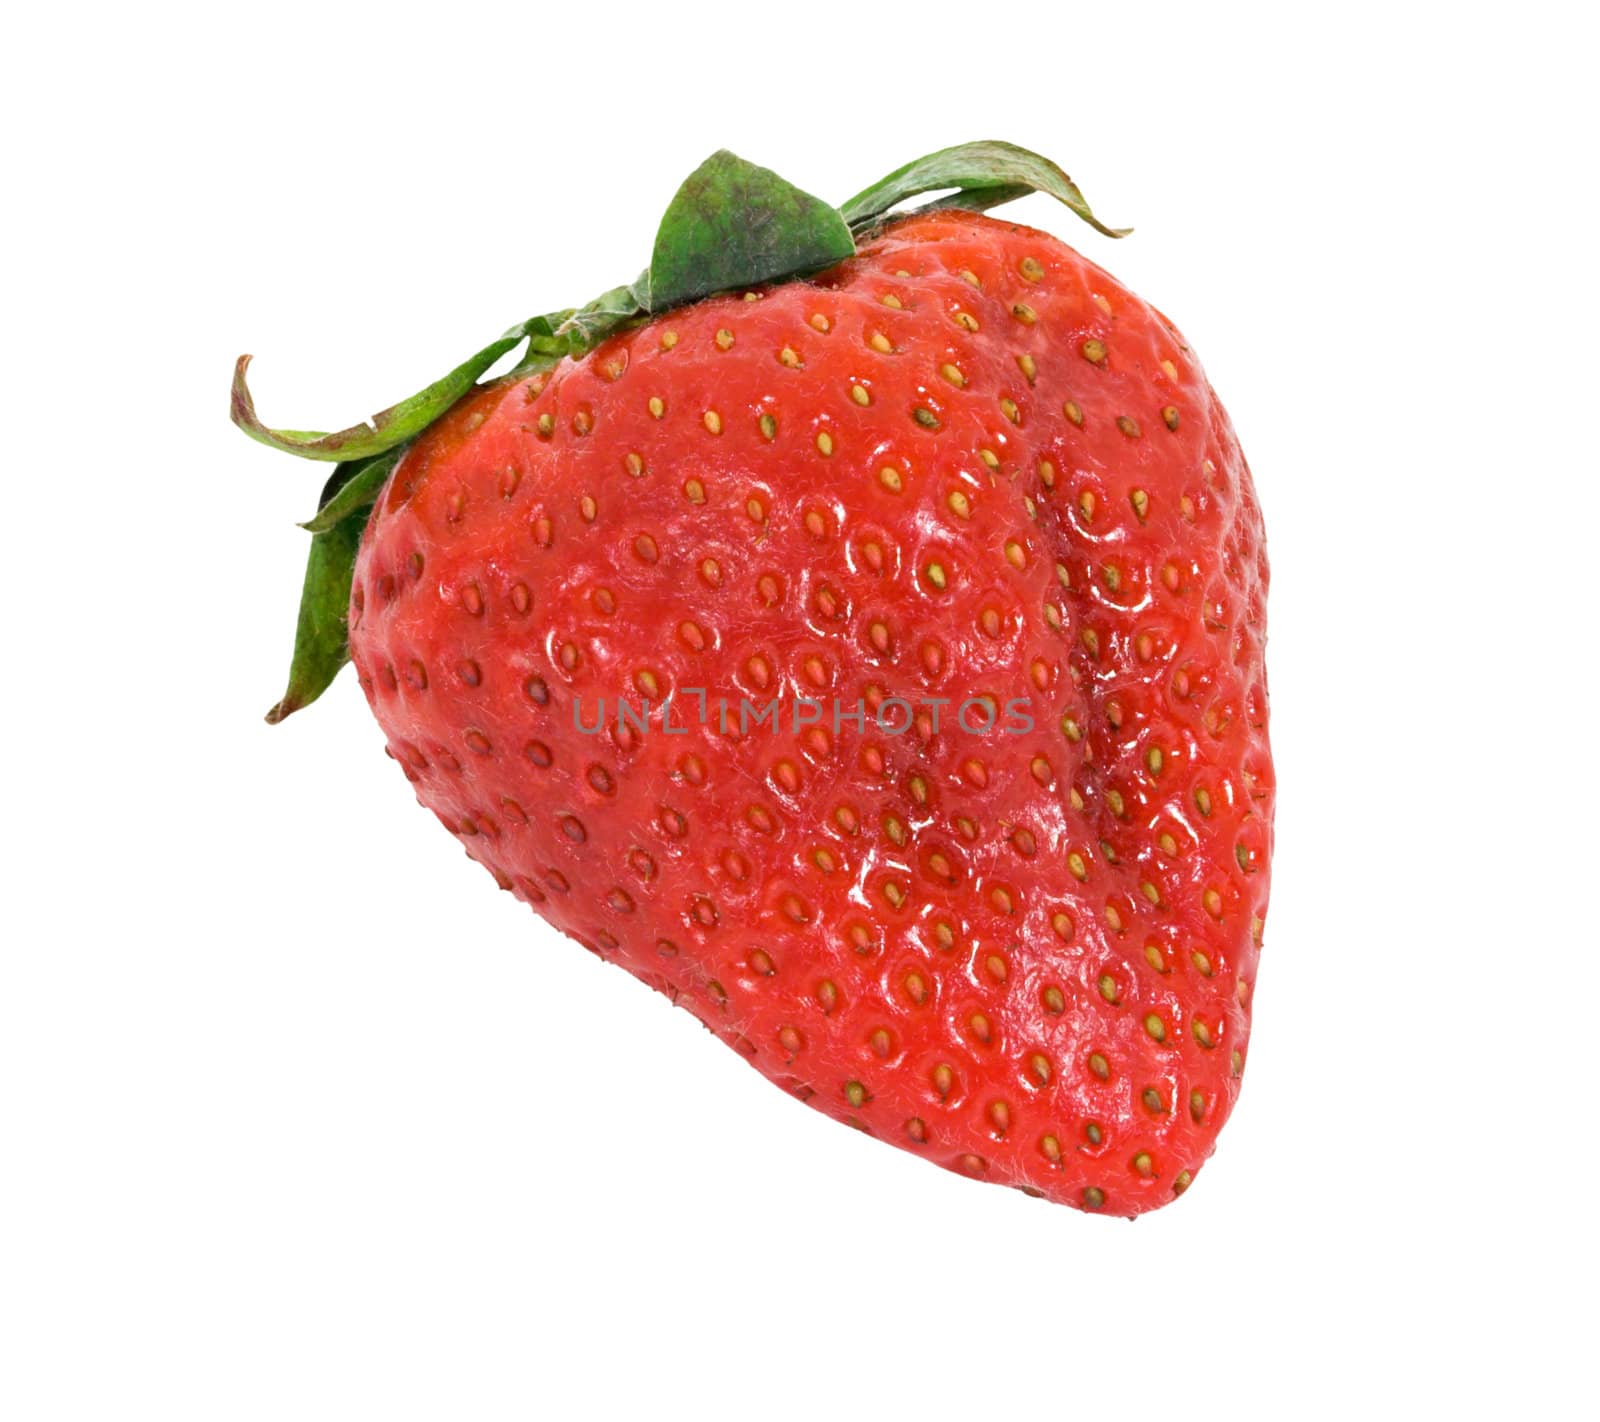 Strawberry by sbonk